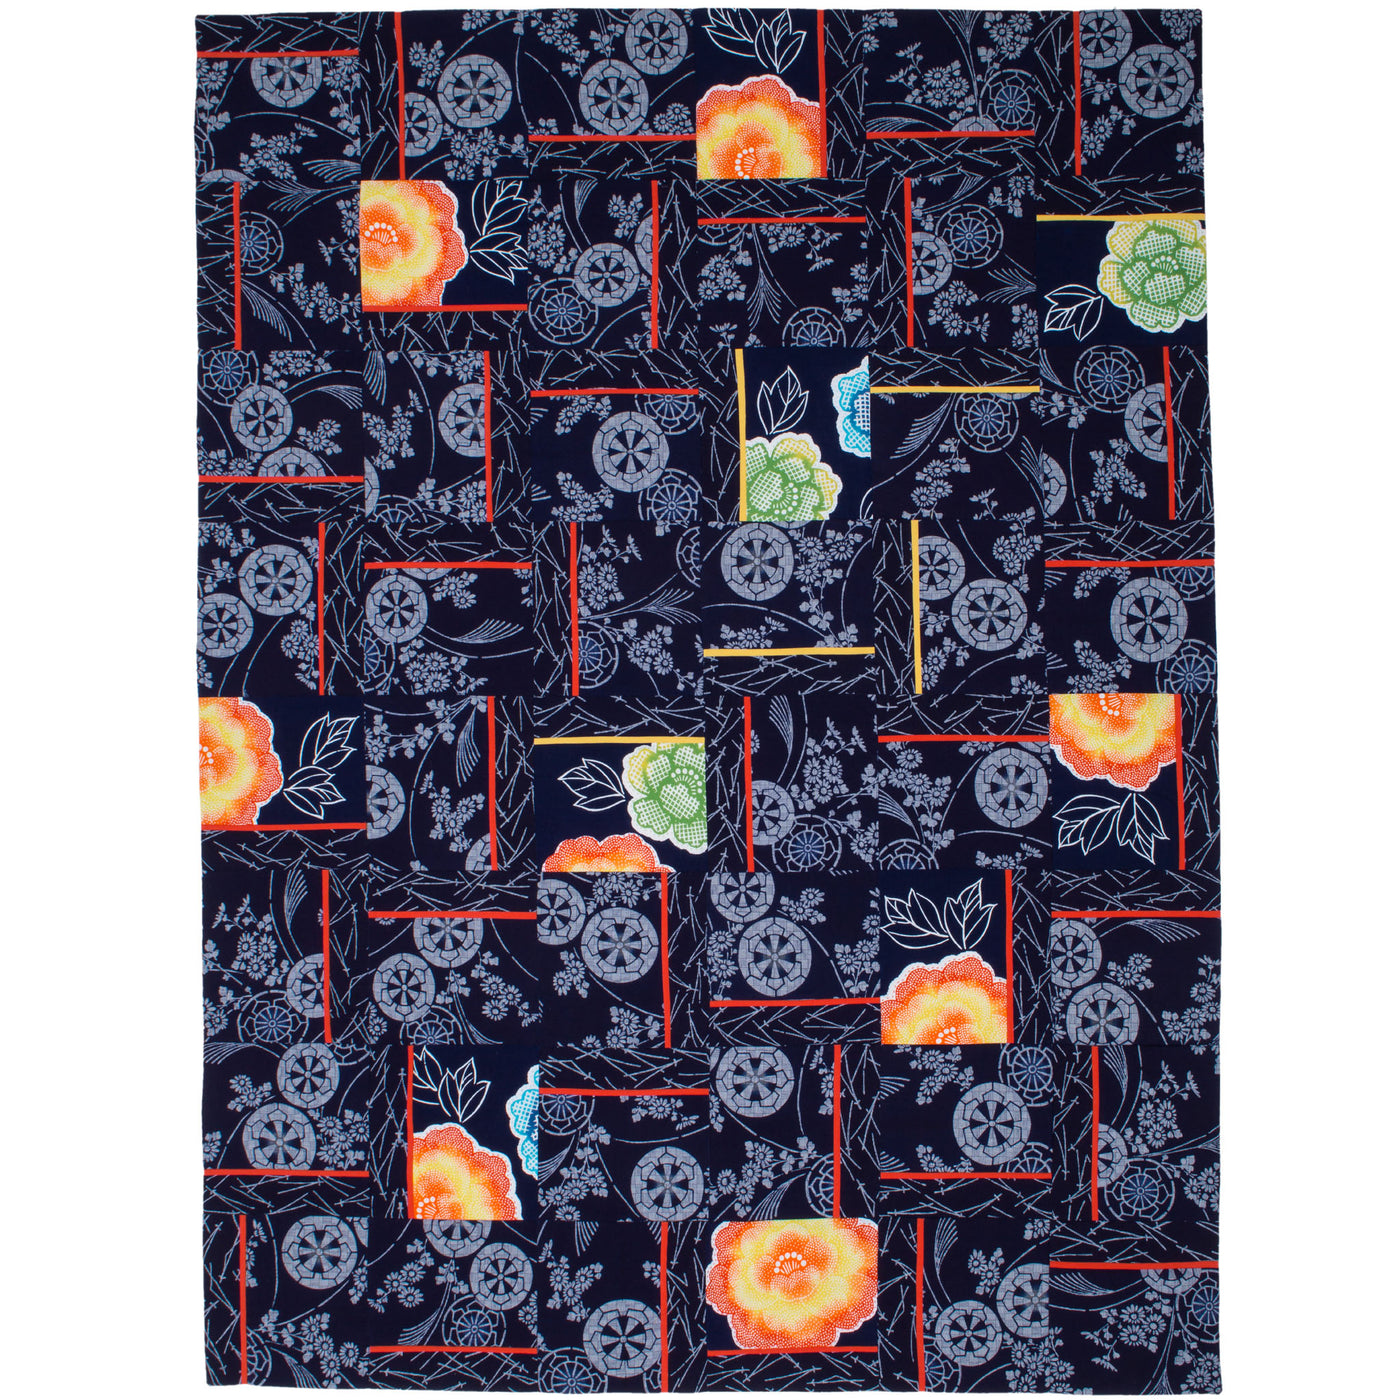 Hidden Wonders, a quilt by Patricia Belyea